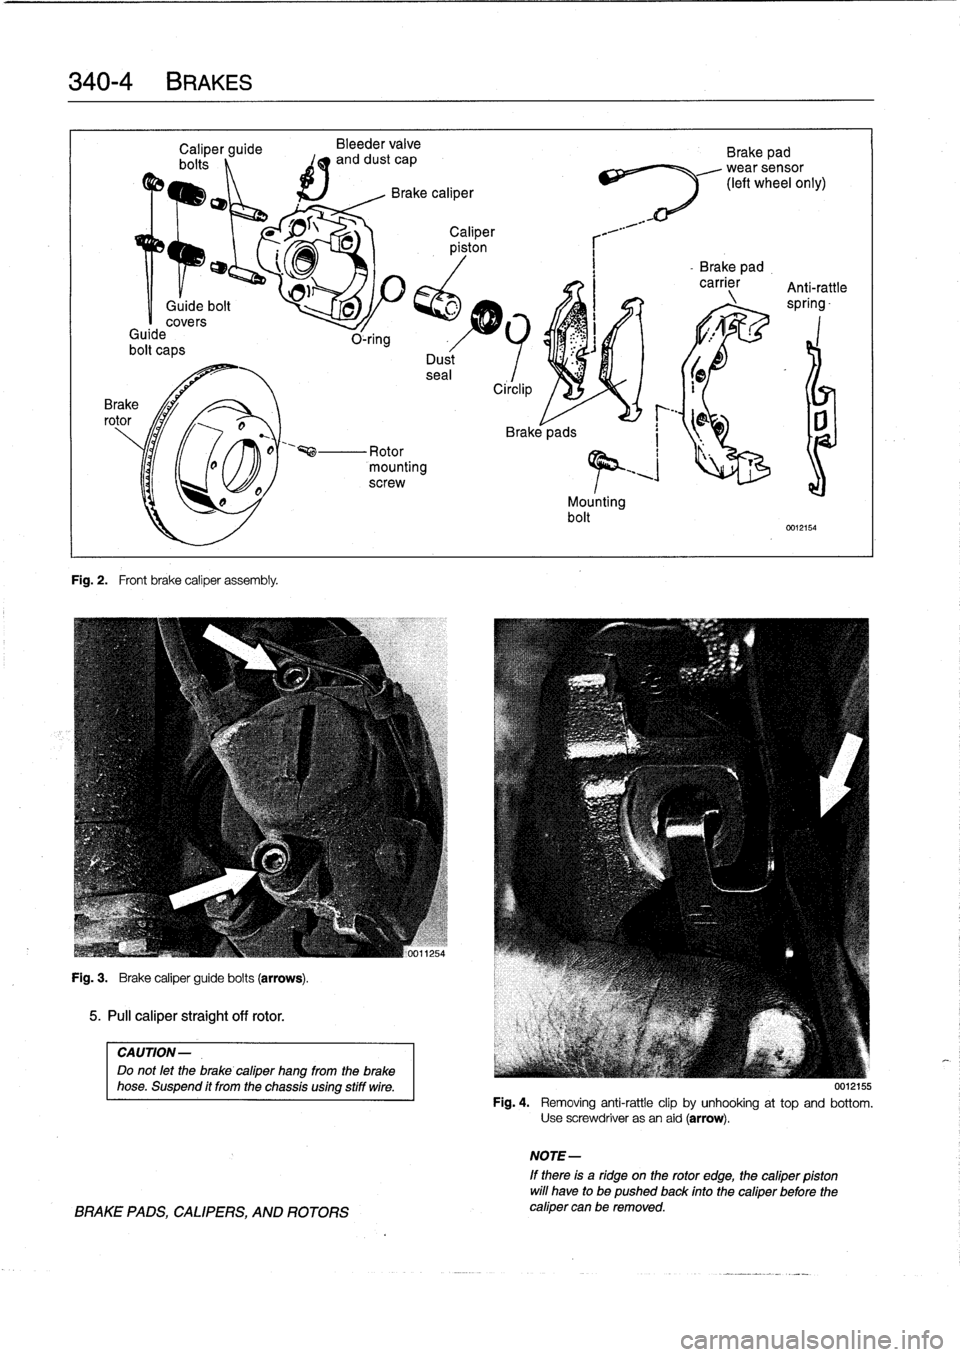 BMW 328i 1995 E36 Workshop Manual 
340-
4
BRAKES

Fig
.
2
.

	

Front
brake
caliper
assembly
.

Bleeder
valve
and
dust
cap

Mounting
bolt

Brake
pad
wearsensor
(left
wheel
only)

-
Brake
pad
.
carrier
Anti-rattle
^_
spring-

0012154

